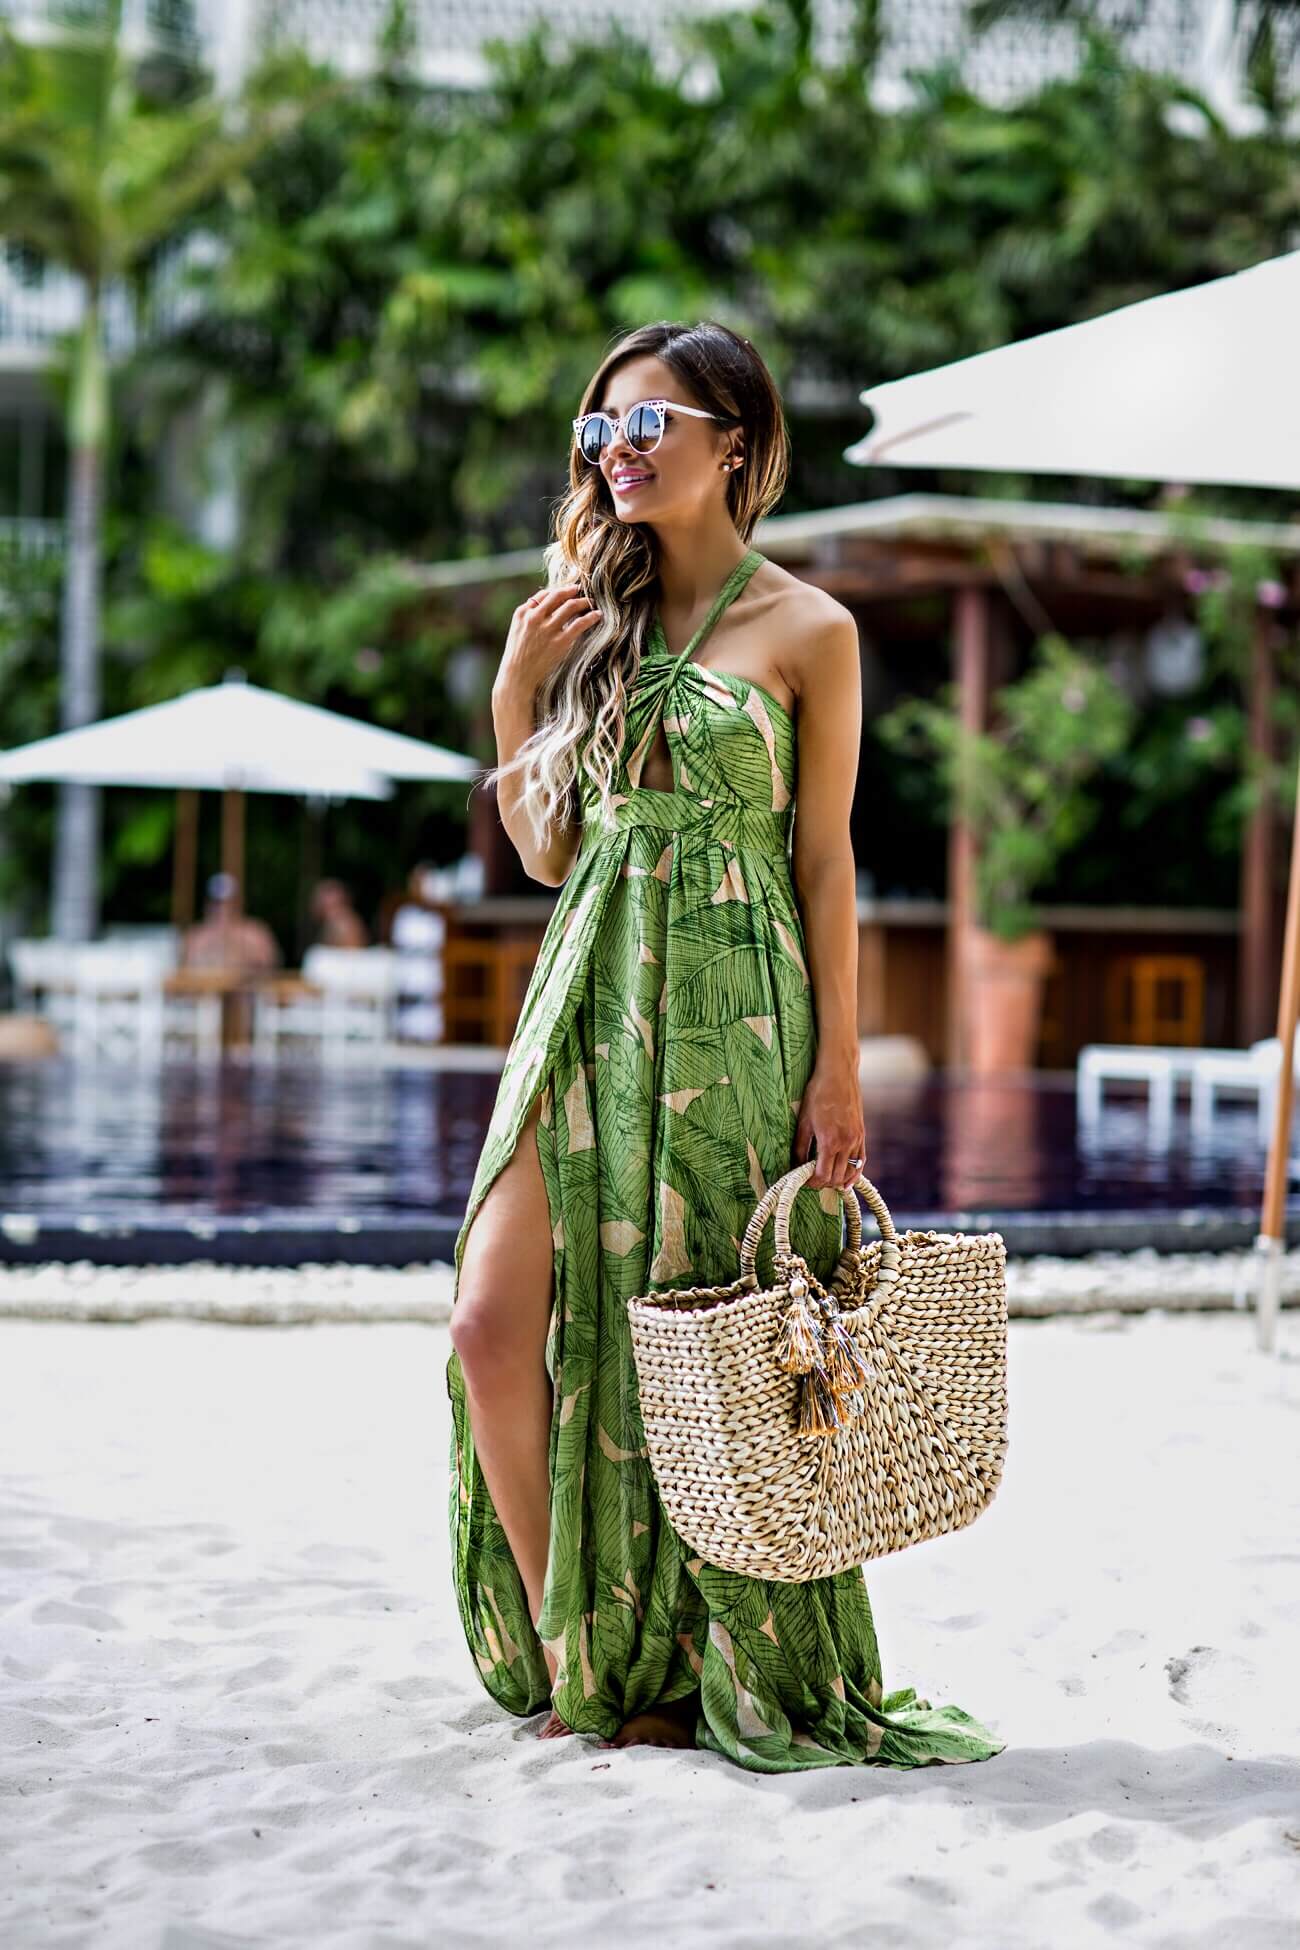 fashion blogger mia mia mine wearing a palm print dress at the modern hotel in honolulu hawaii